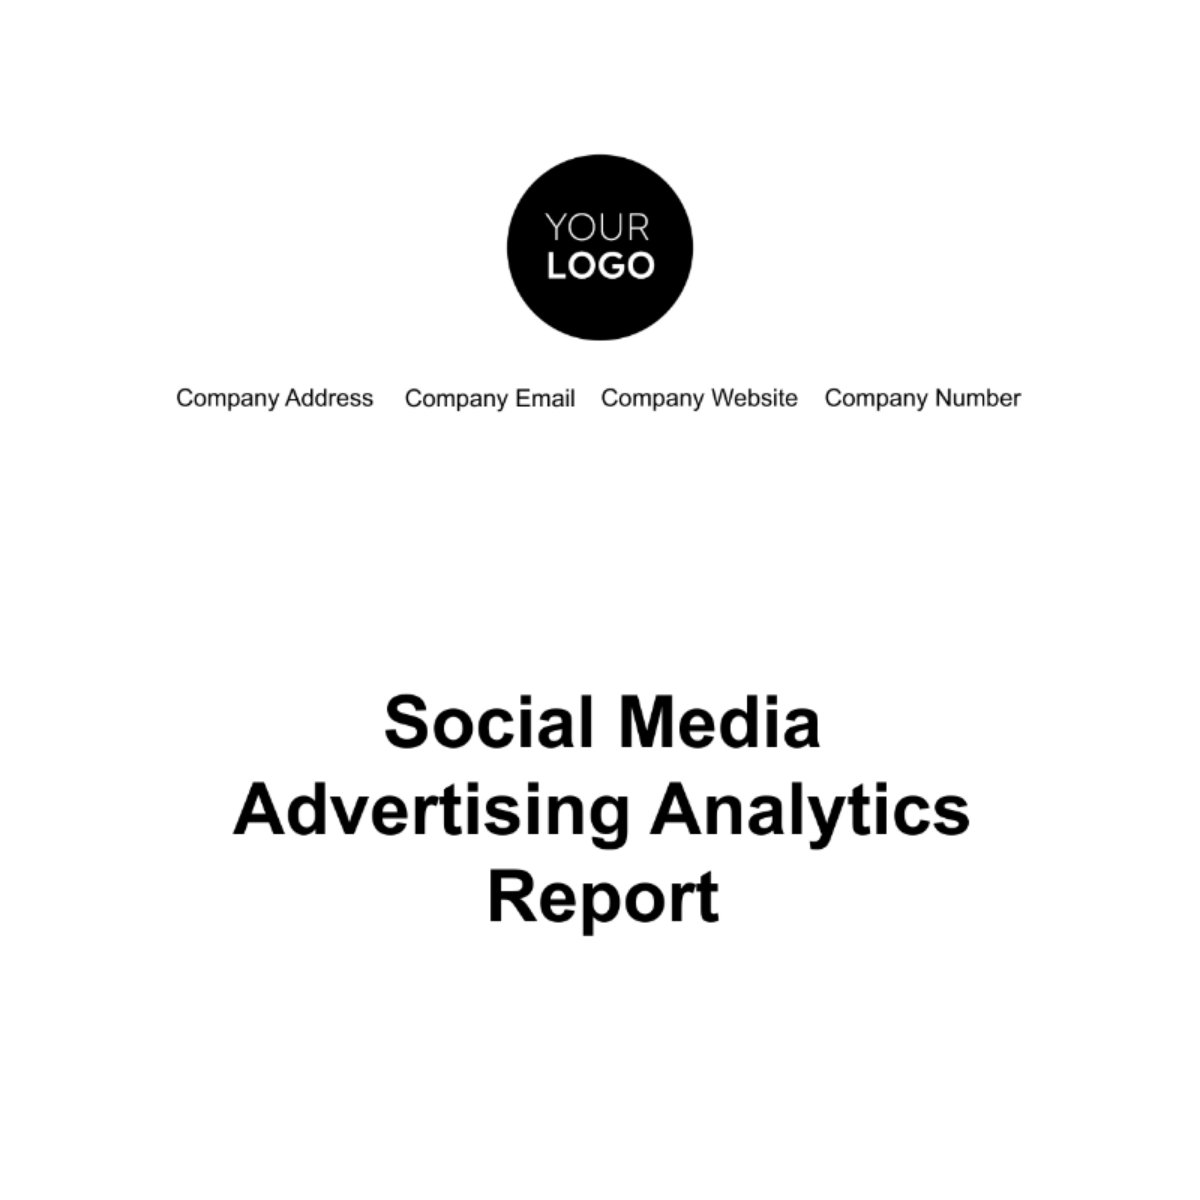 Social Media Advertising Analytics Report Template